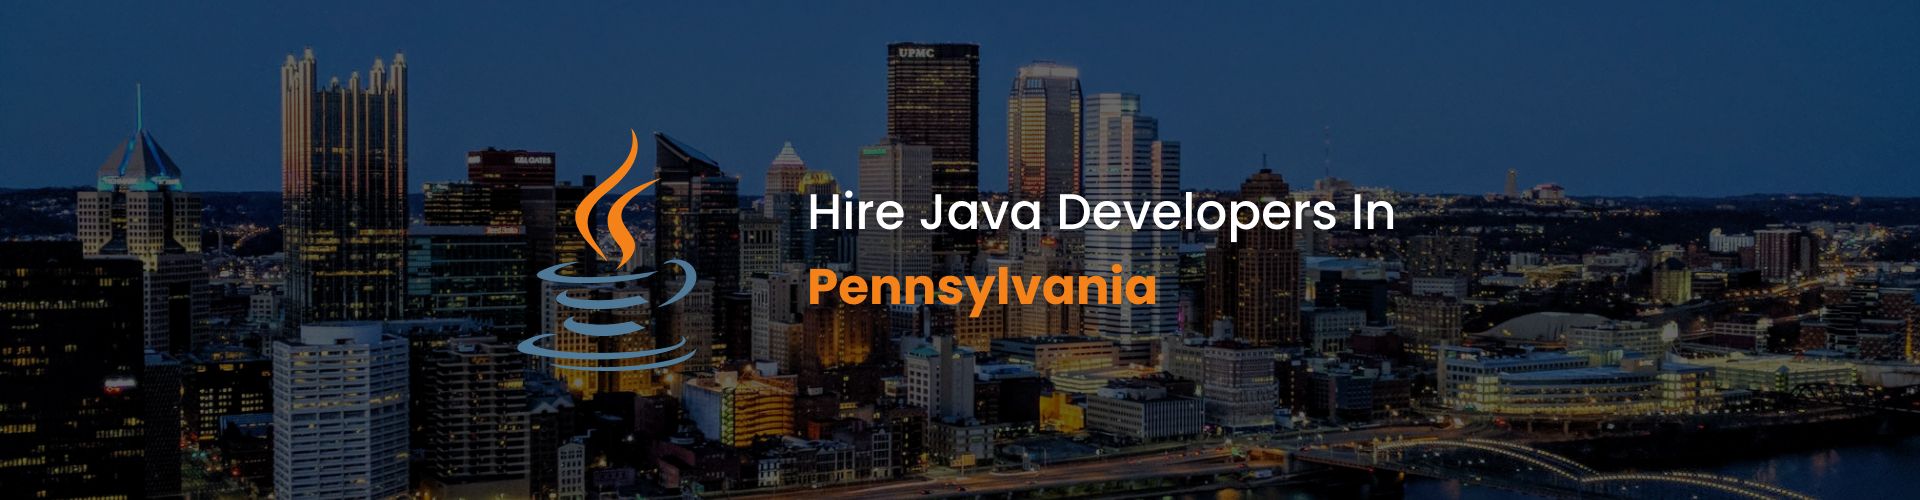 hire java developers in pennsylvania